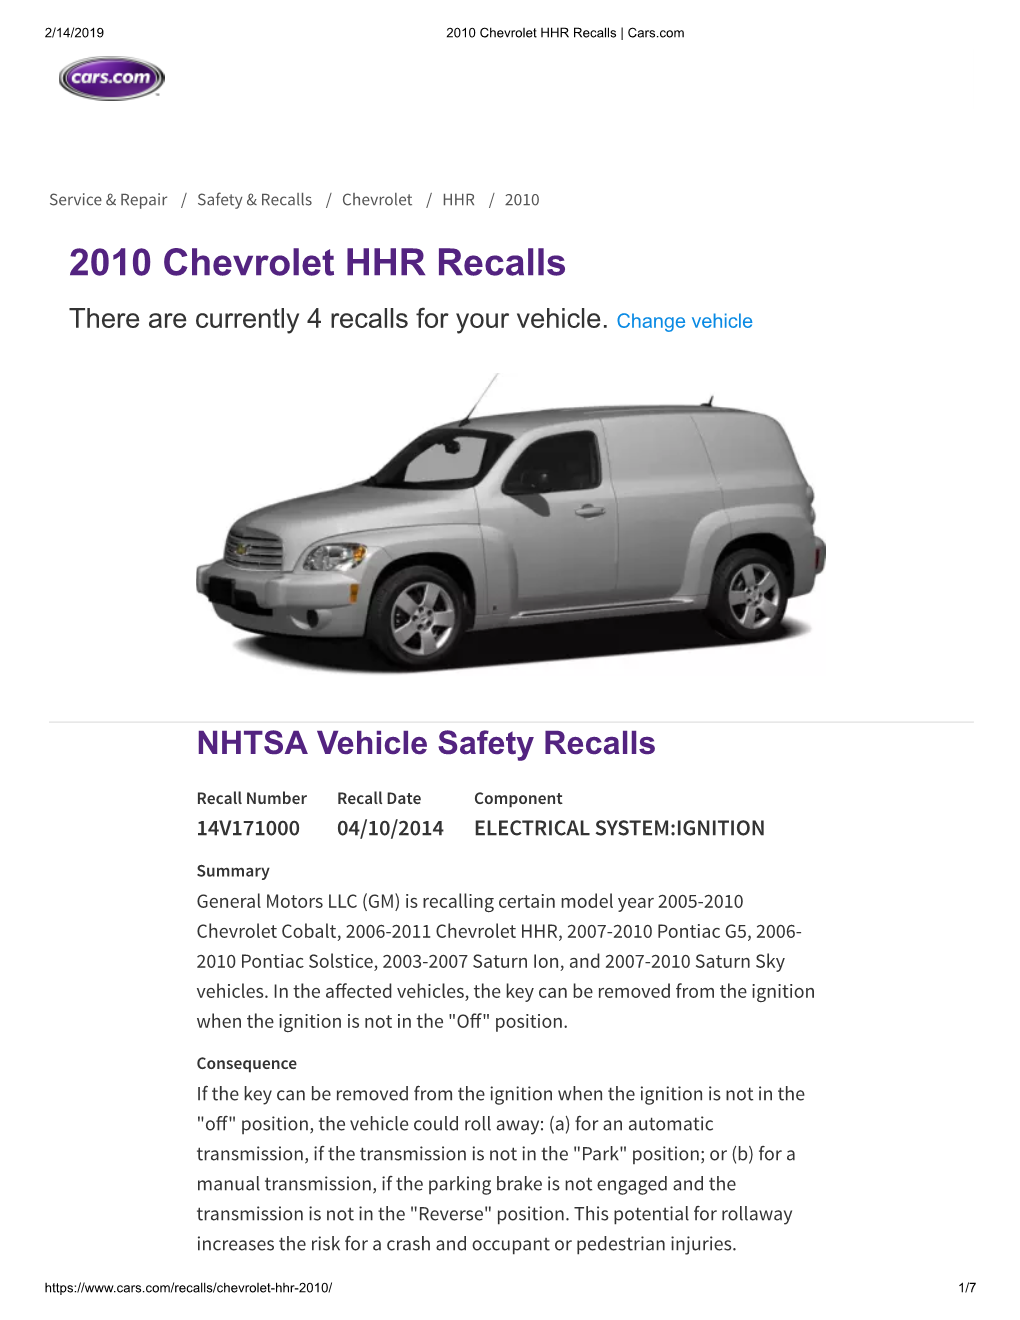 2010 Chevrolet HHR Recalls | Cars.Com